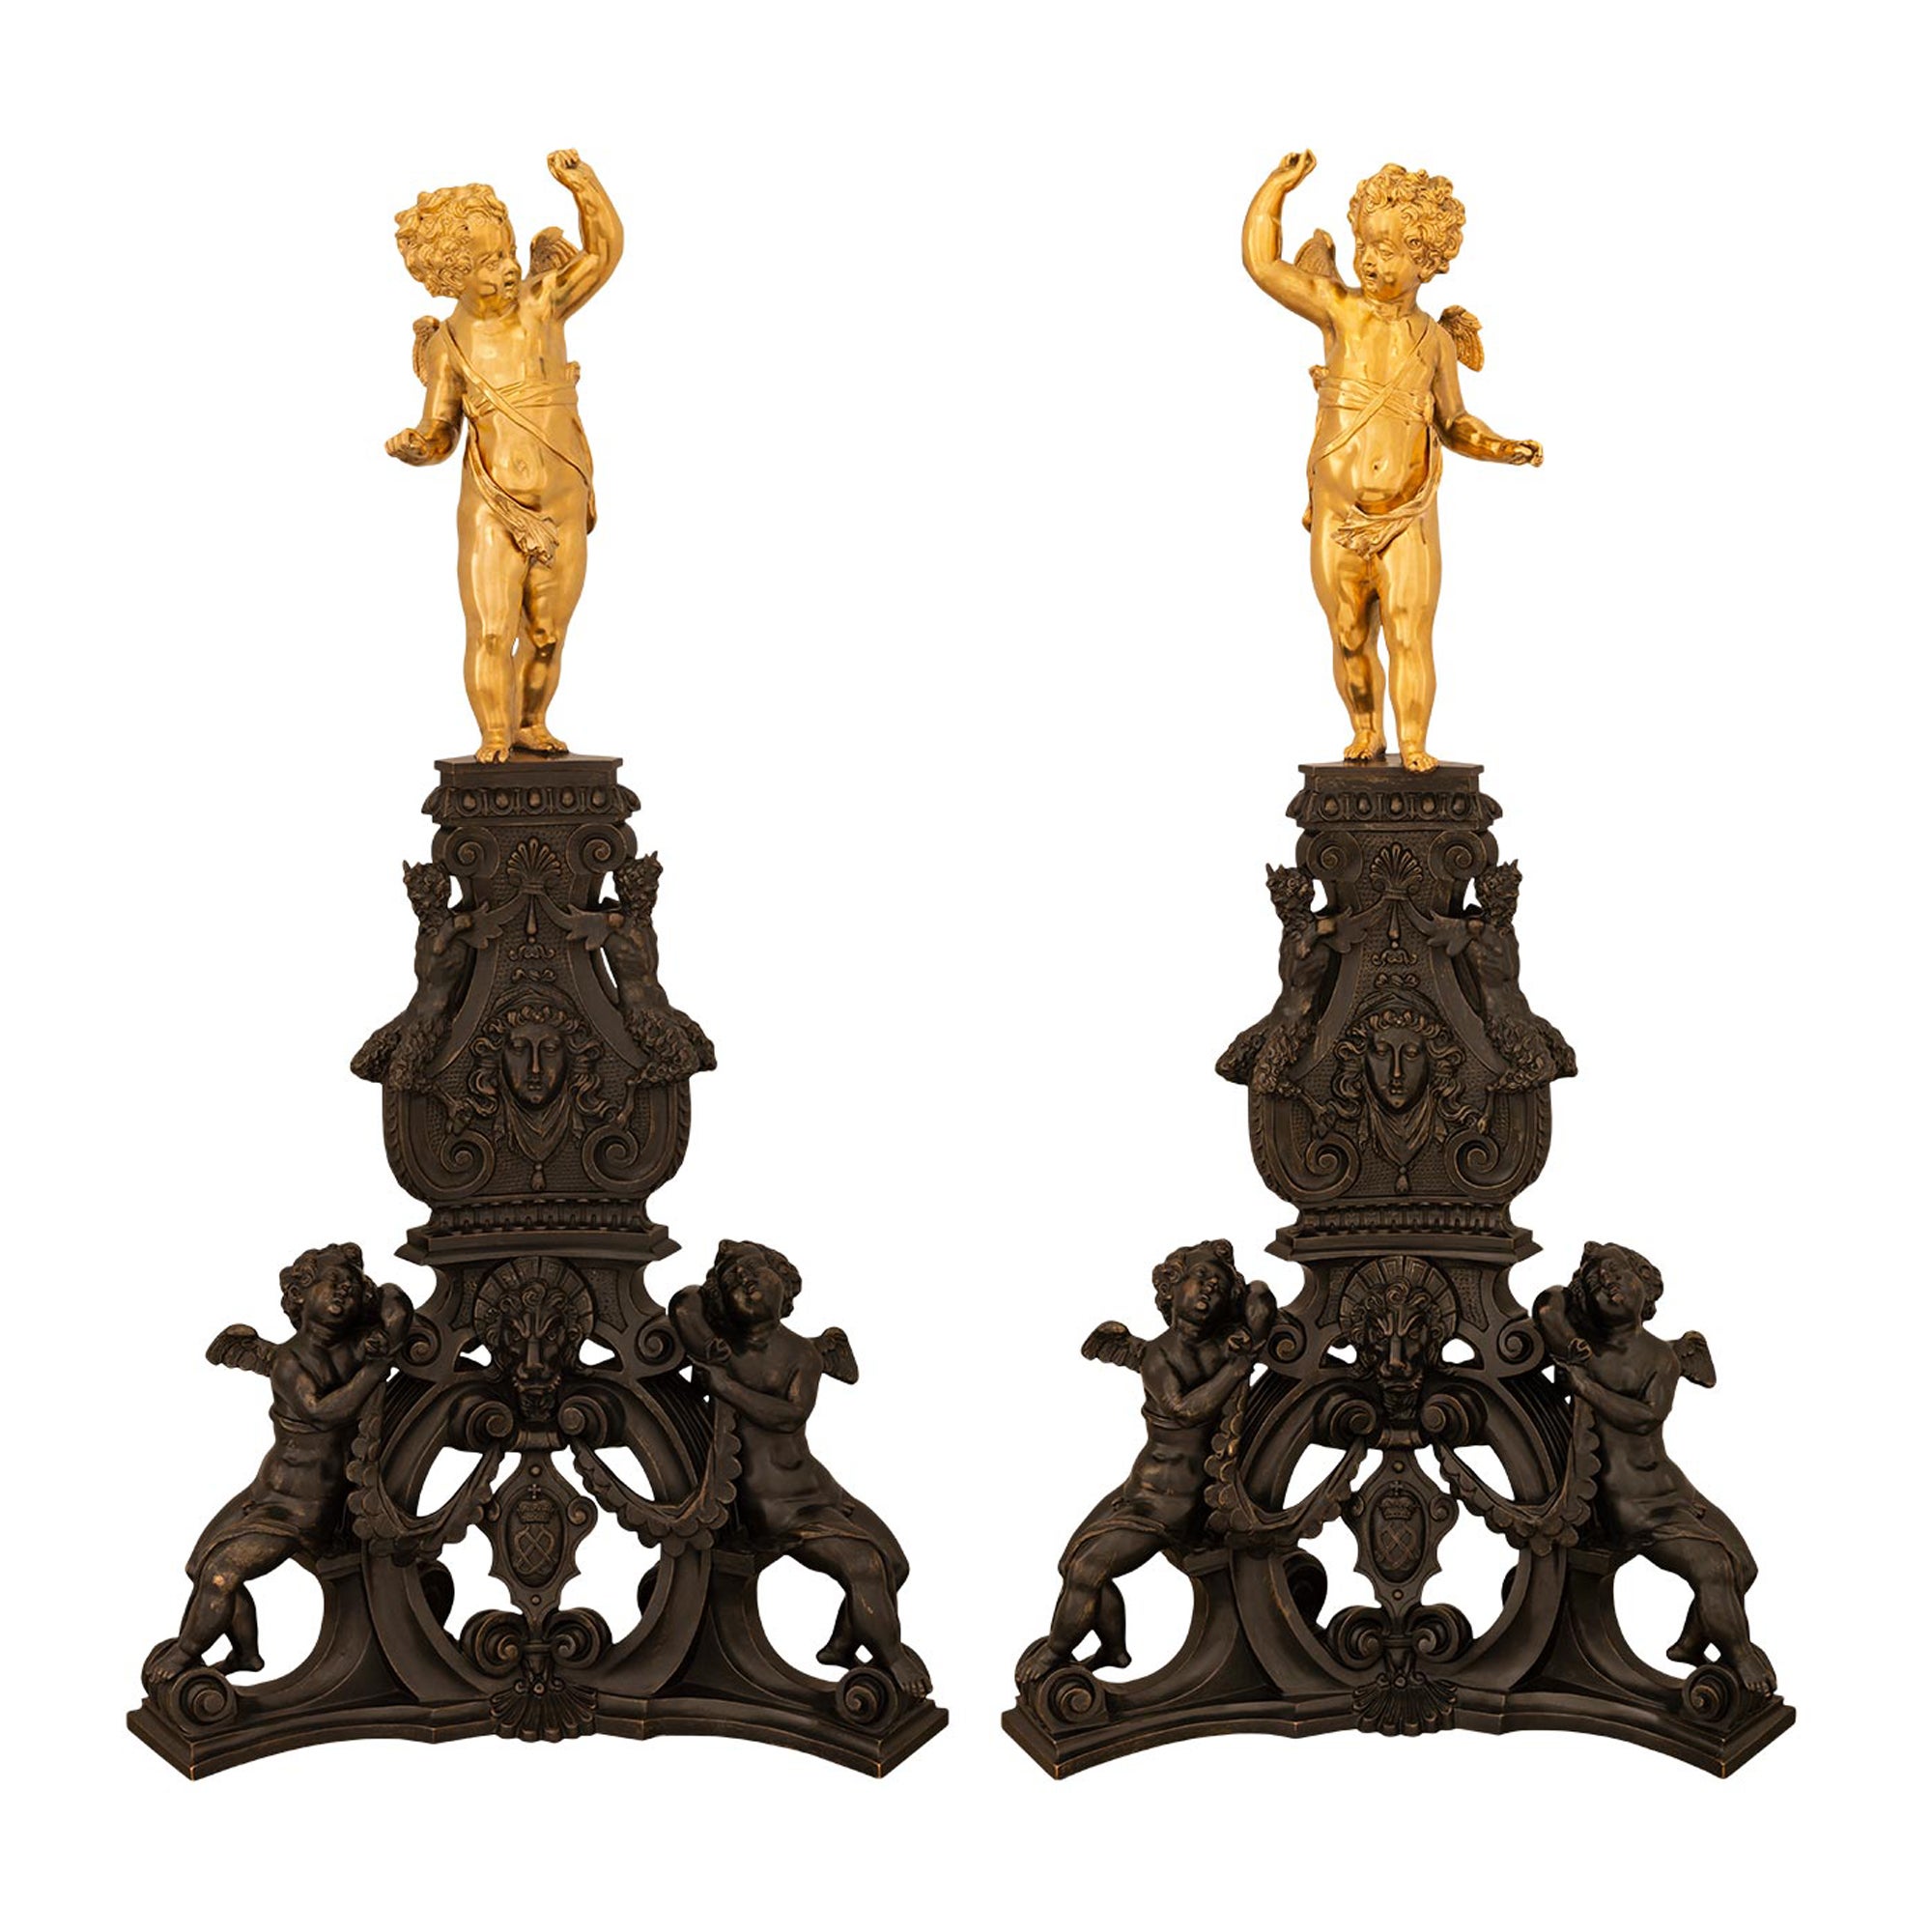 Trueing Pair of French 19th Century Napoleon III Period Ormolu & Bronze Andirons